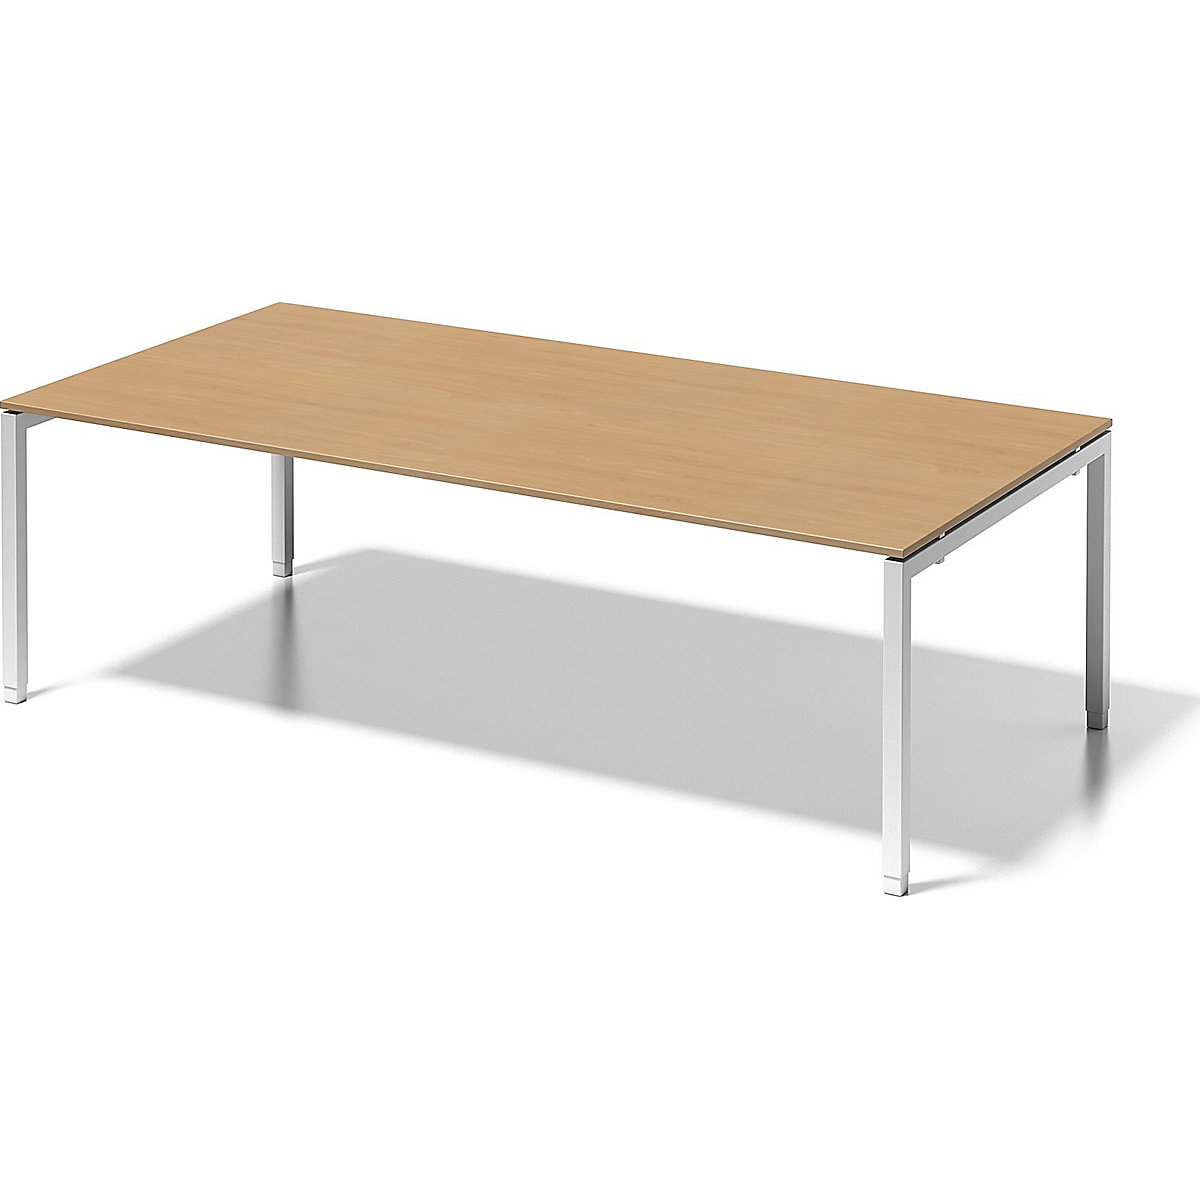 CITO desk, U-frame – BISLEY, HxWxD 650 – 850 x 2400 x 1200 mm, white frame, beech tabletop-5